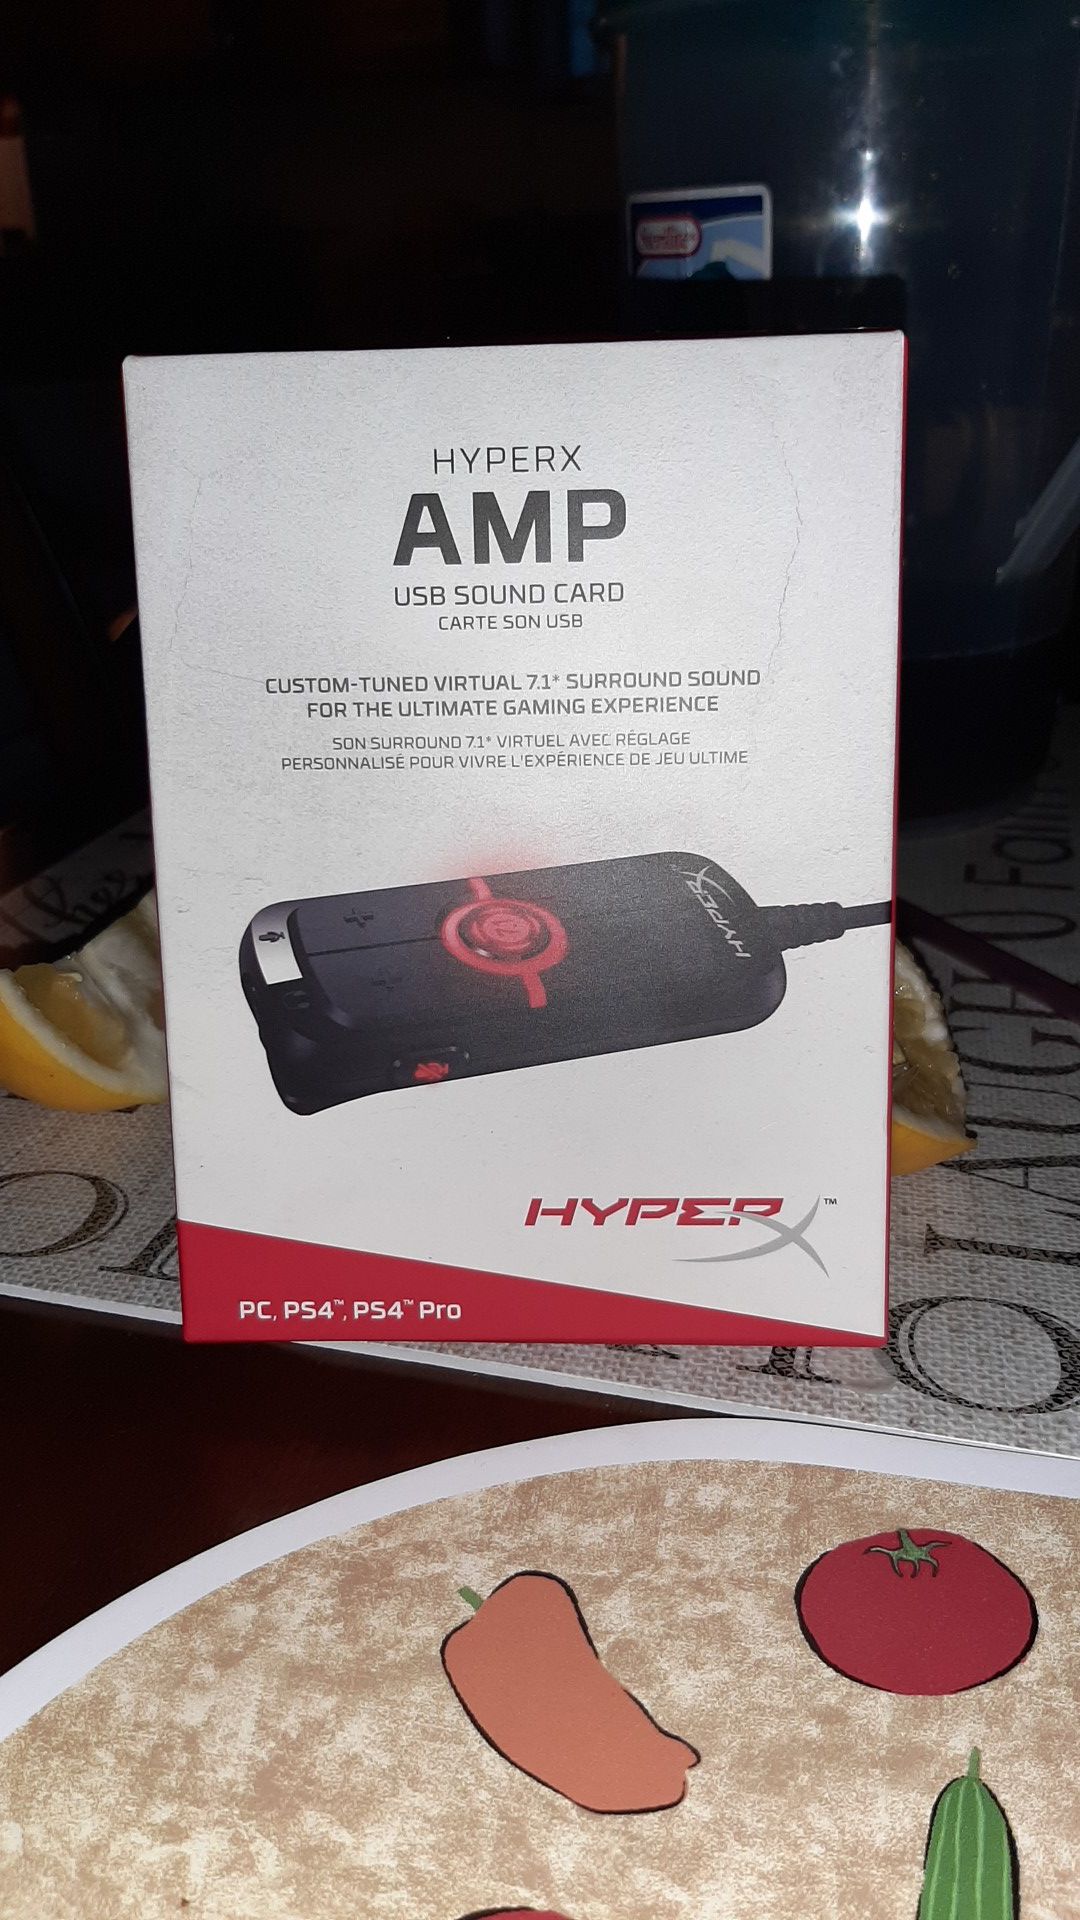 HyperX AMP USB sound card